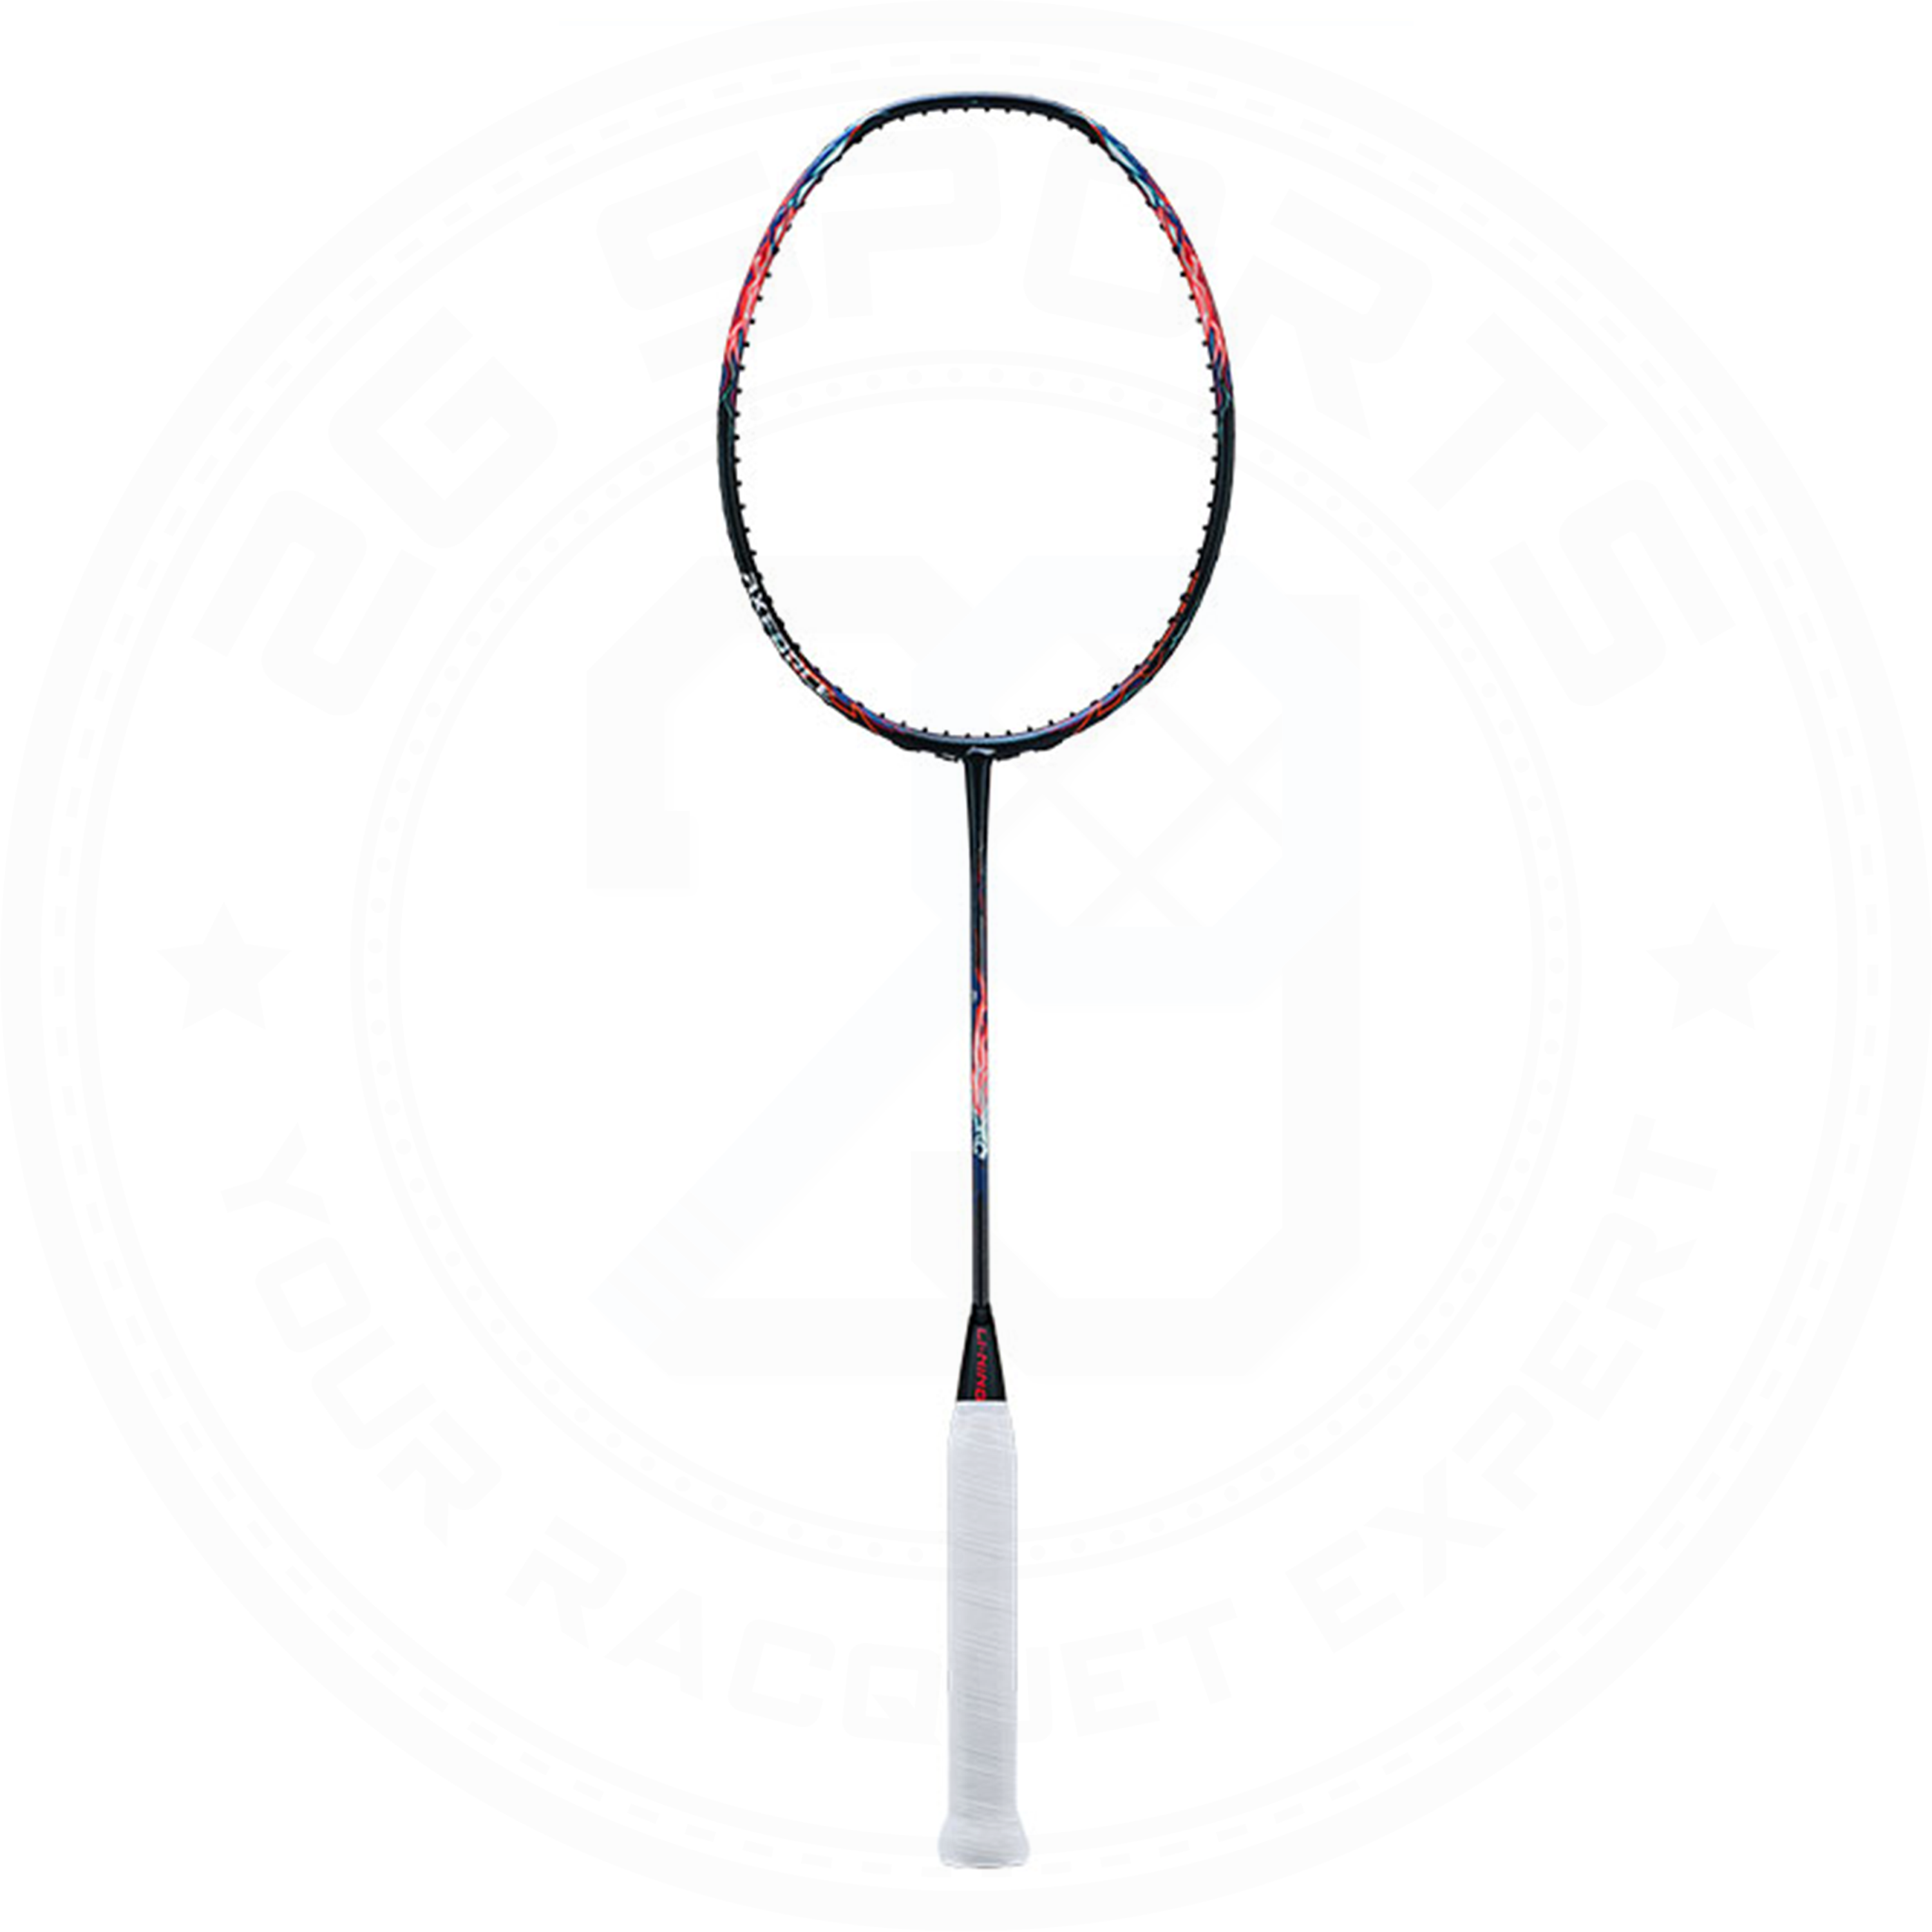 Li-Ning Axforce 90 TIGER MAX Power Control Badminton Racquet 3U(88g)G5